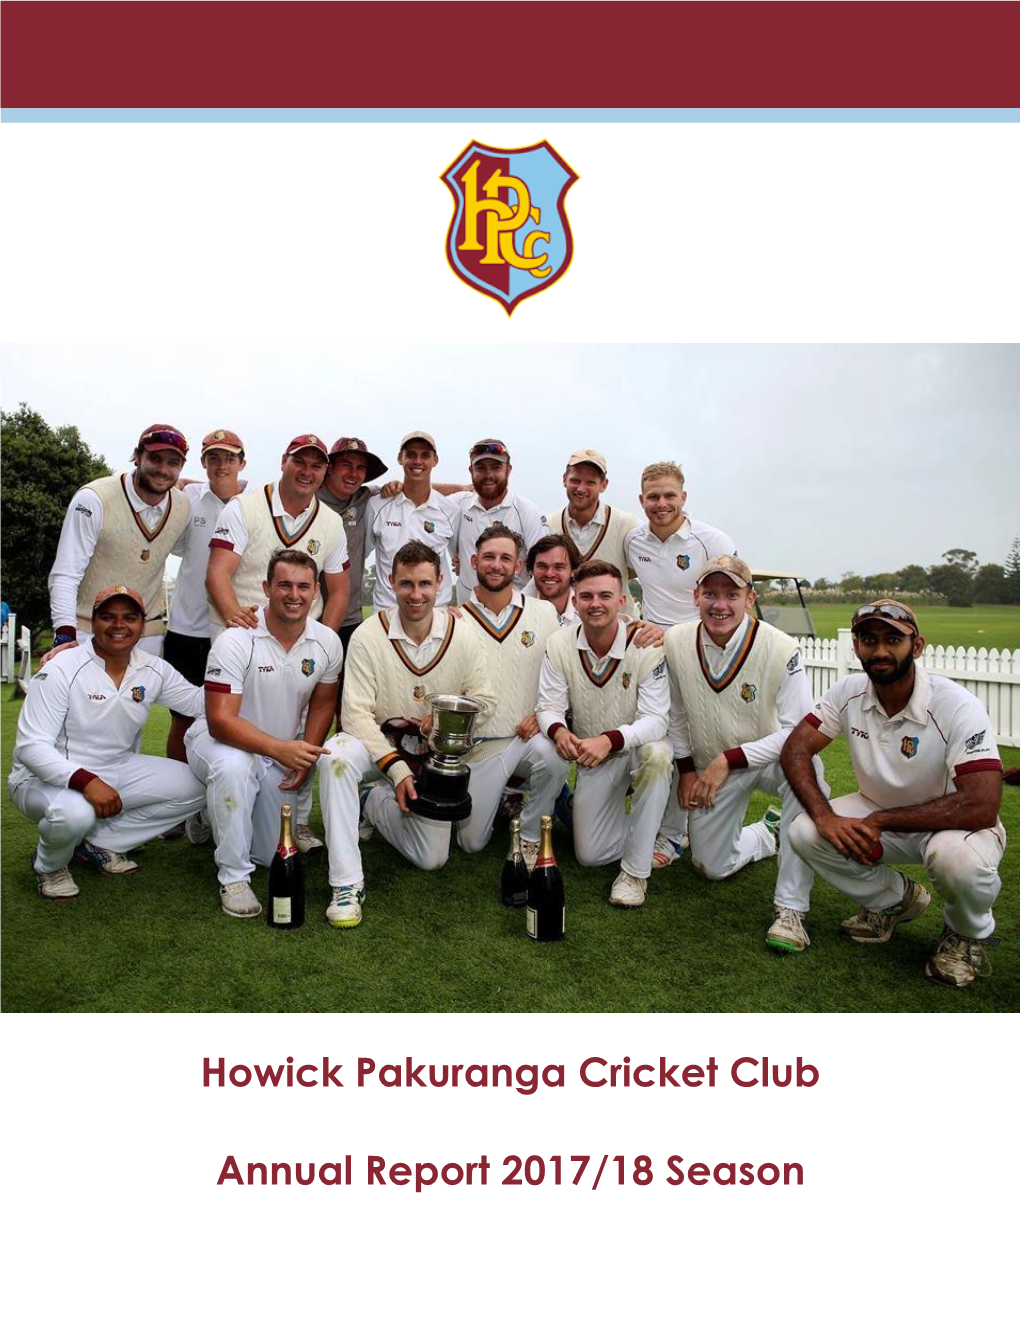 Howick Pakuranga Cricket Club Annual Report 2017/18 Season